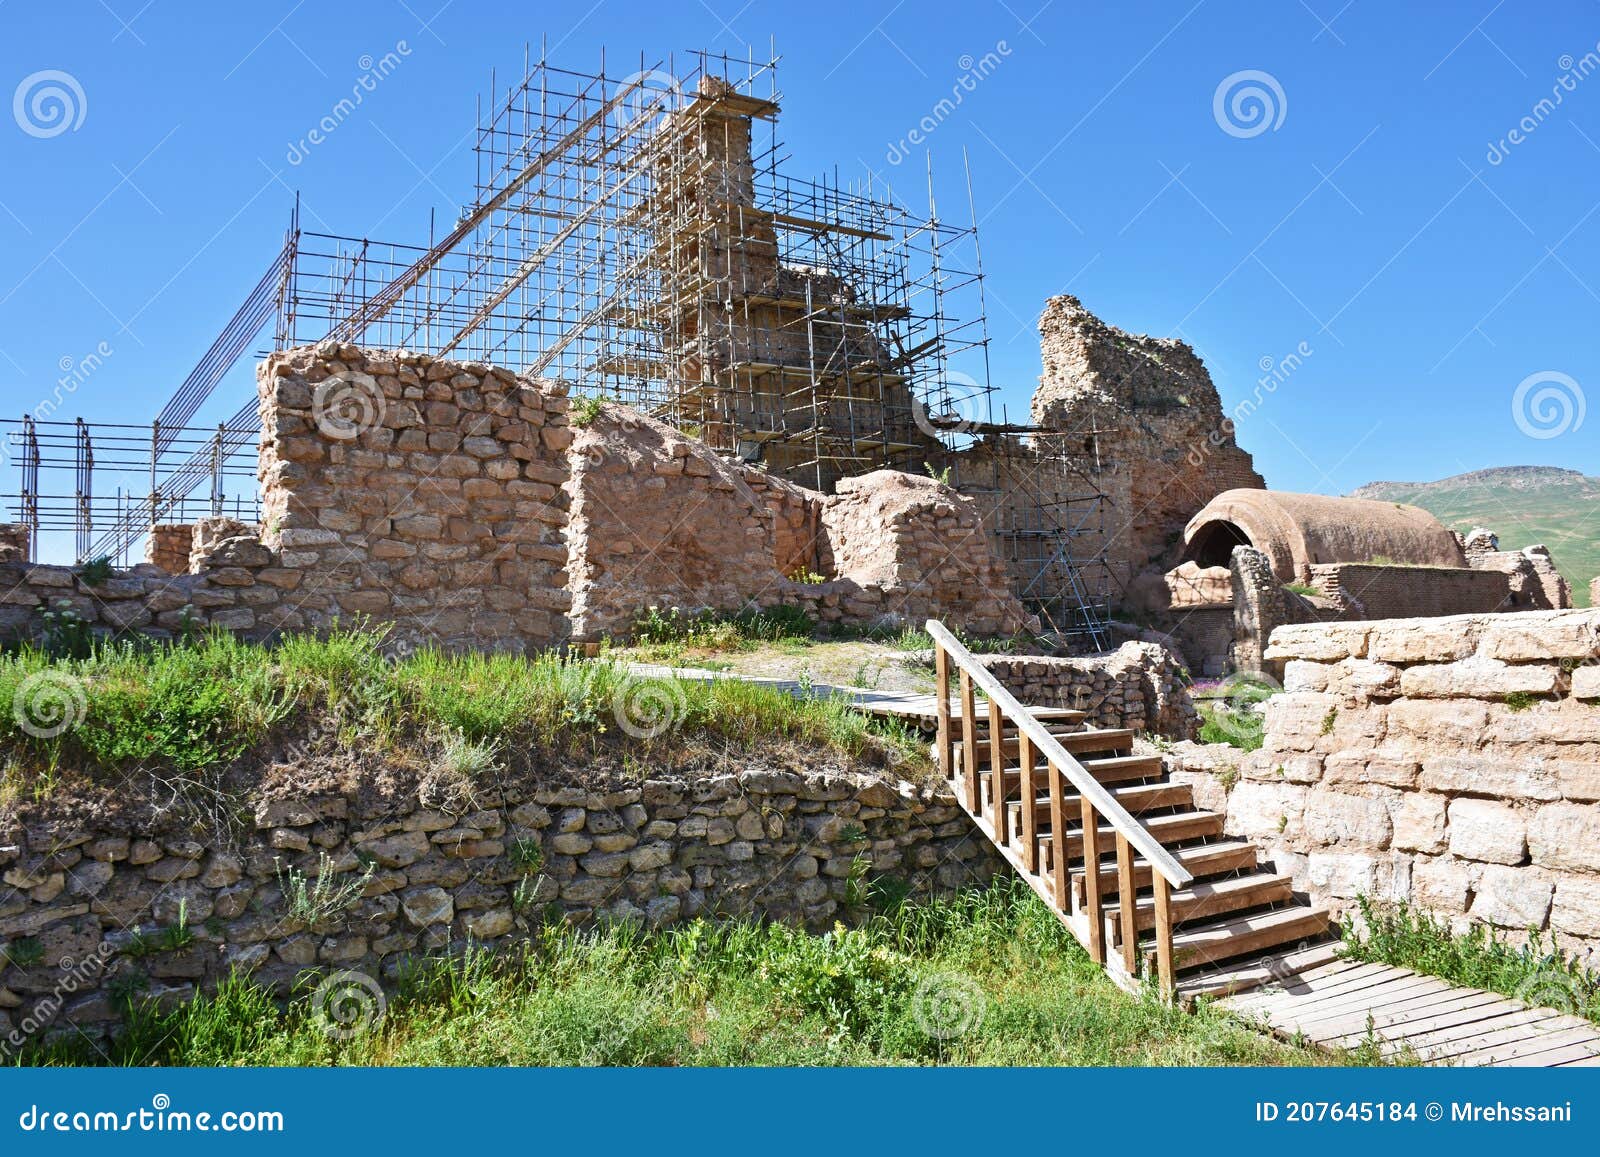 takht-e soleiman ruins , unesco world heritage site in takab , iran